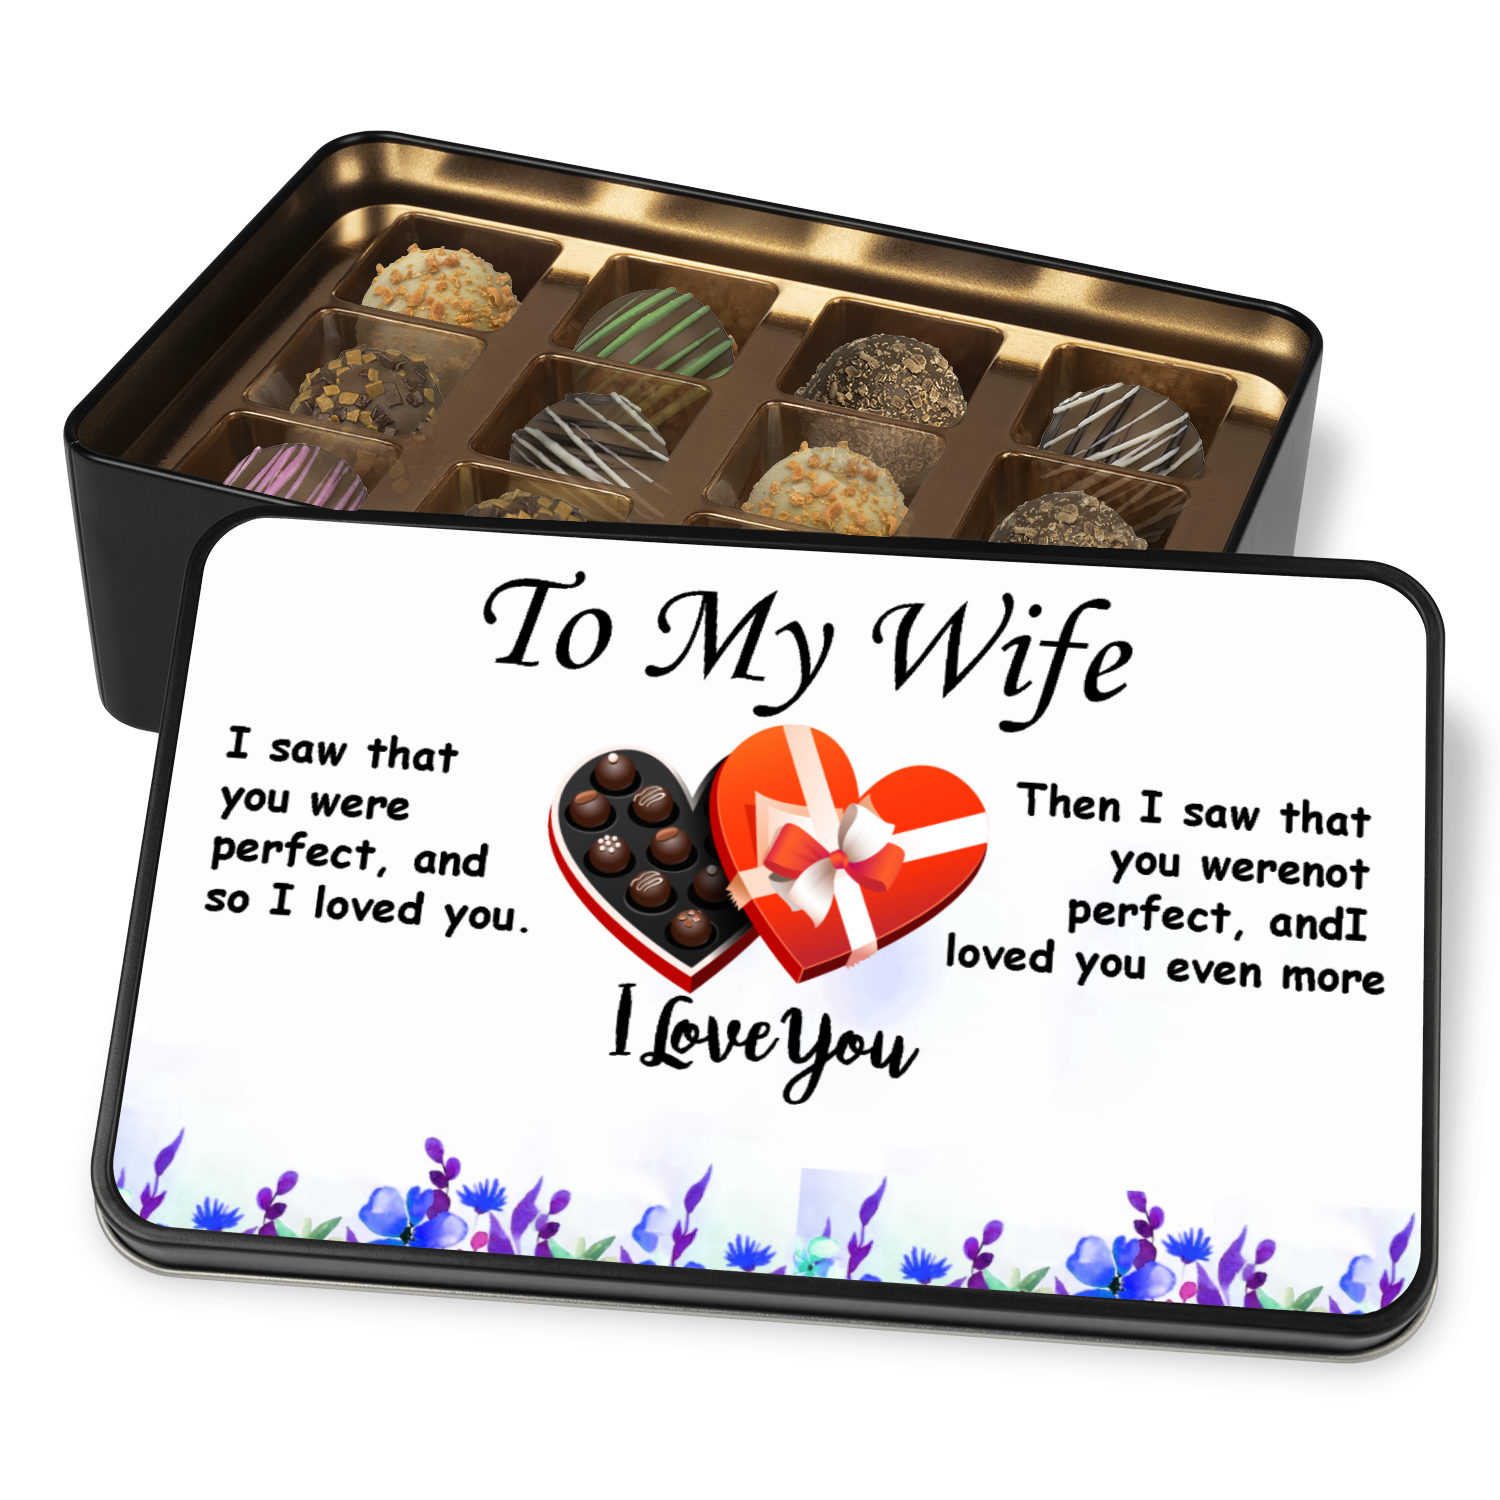 CHOCOLATE TRUFFLES TO MY WIFE - I LOVE YOU